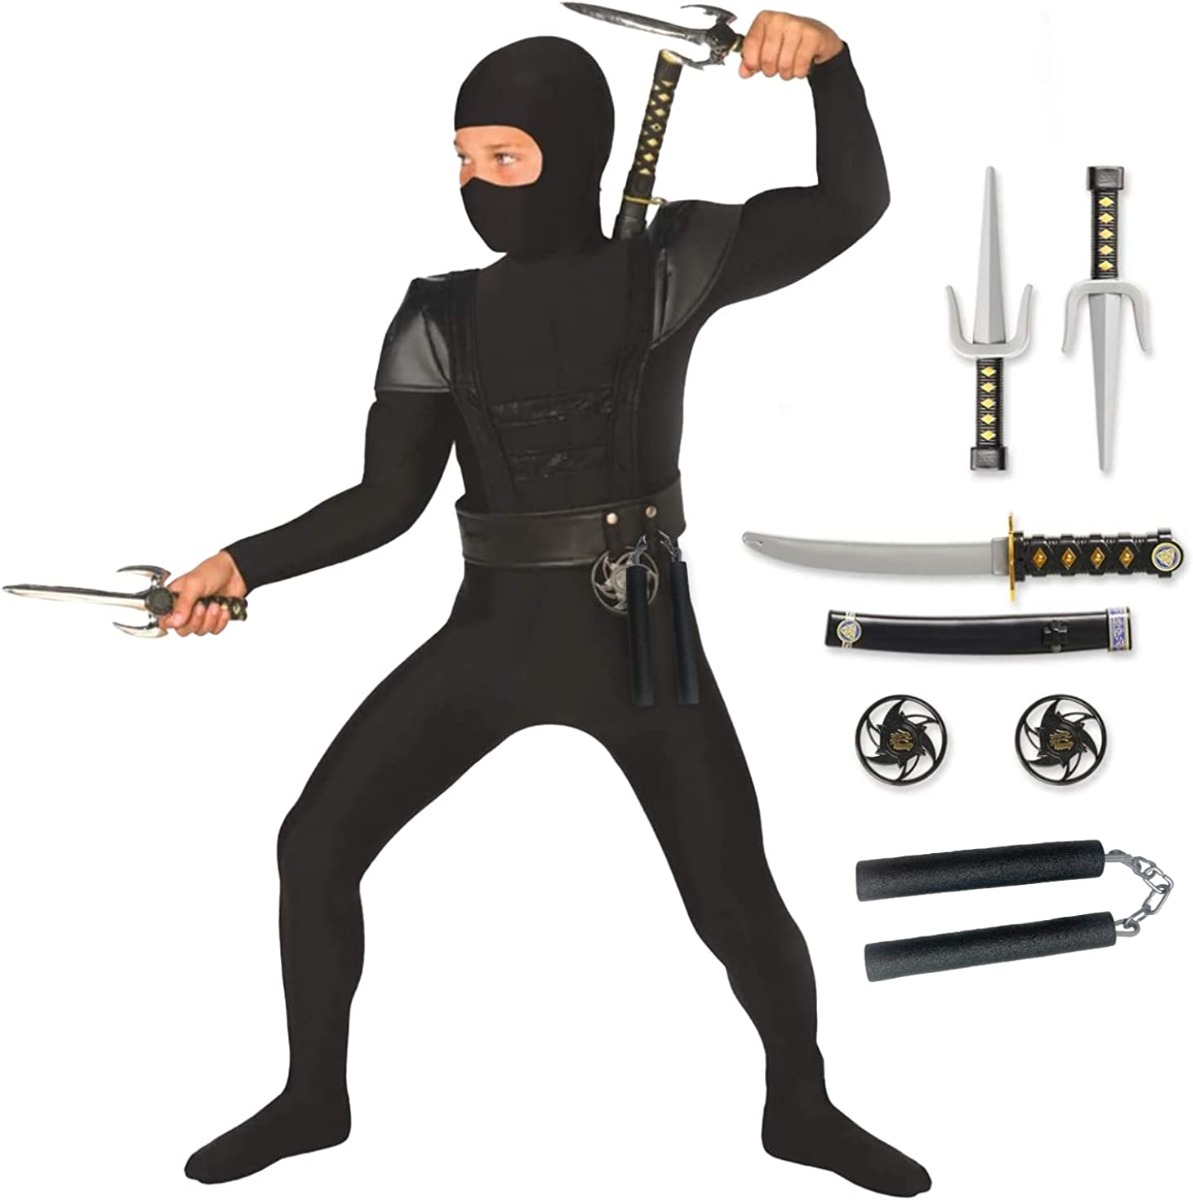 https://www.morphsuits.com/media/catalog/product/k/i/kids_black_ninja_costume_3.jpg?width=1200&height=1200&store=morphsuitsus_storeview&image-type=image